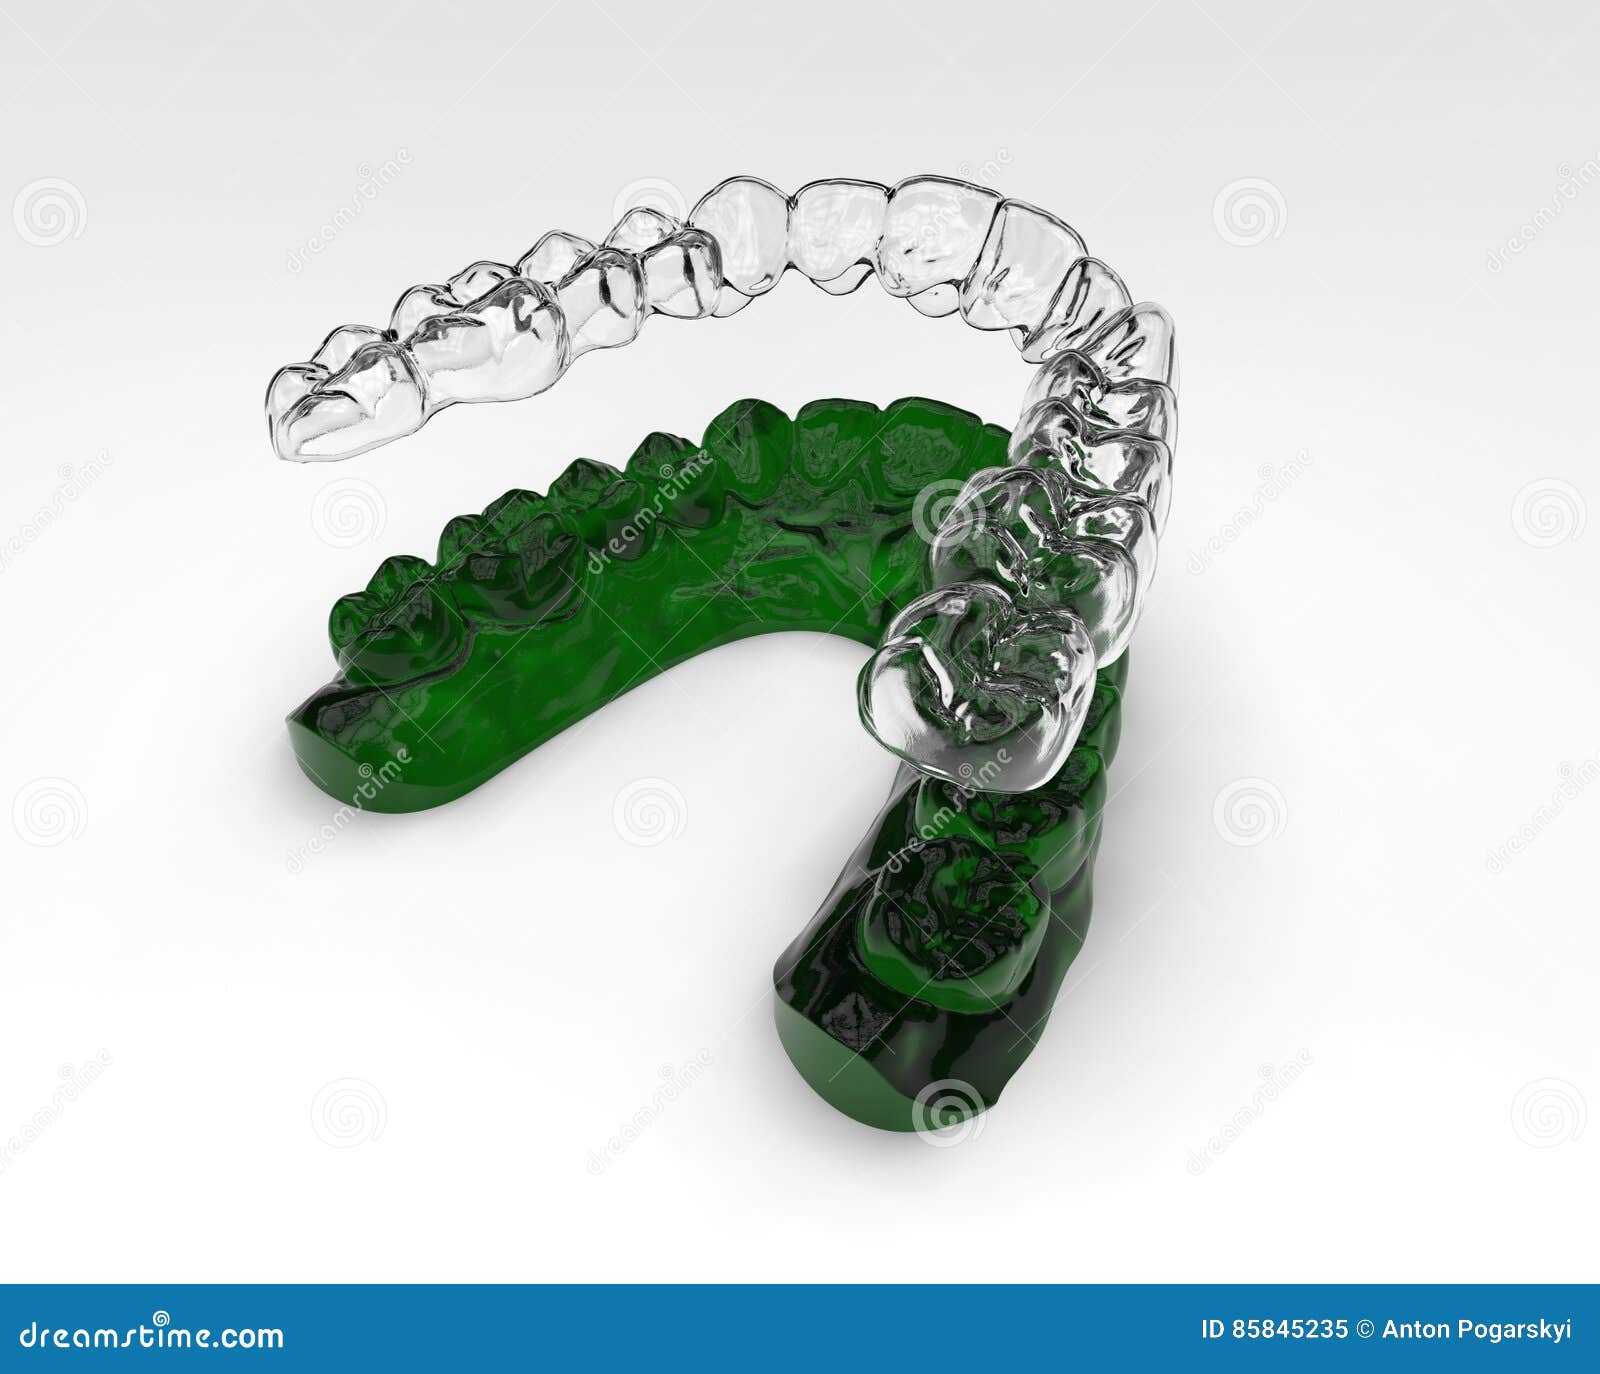 overschreden Bot Penelope 3D rendering teeth stock illustration. Illustration of decorative - 85845235